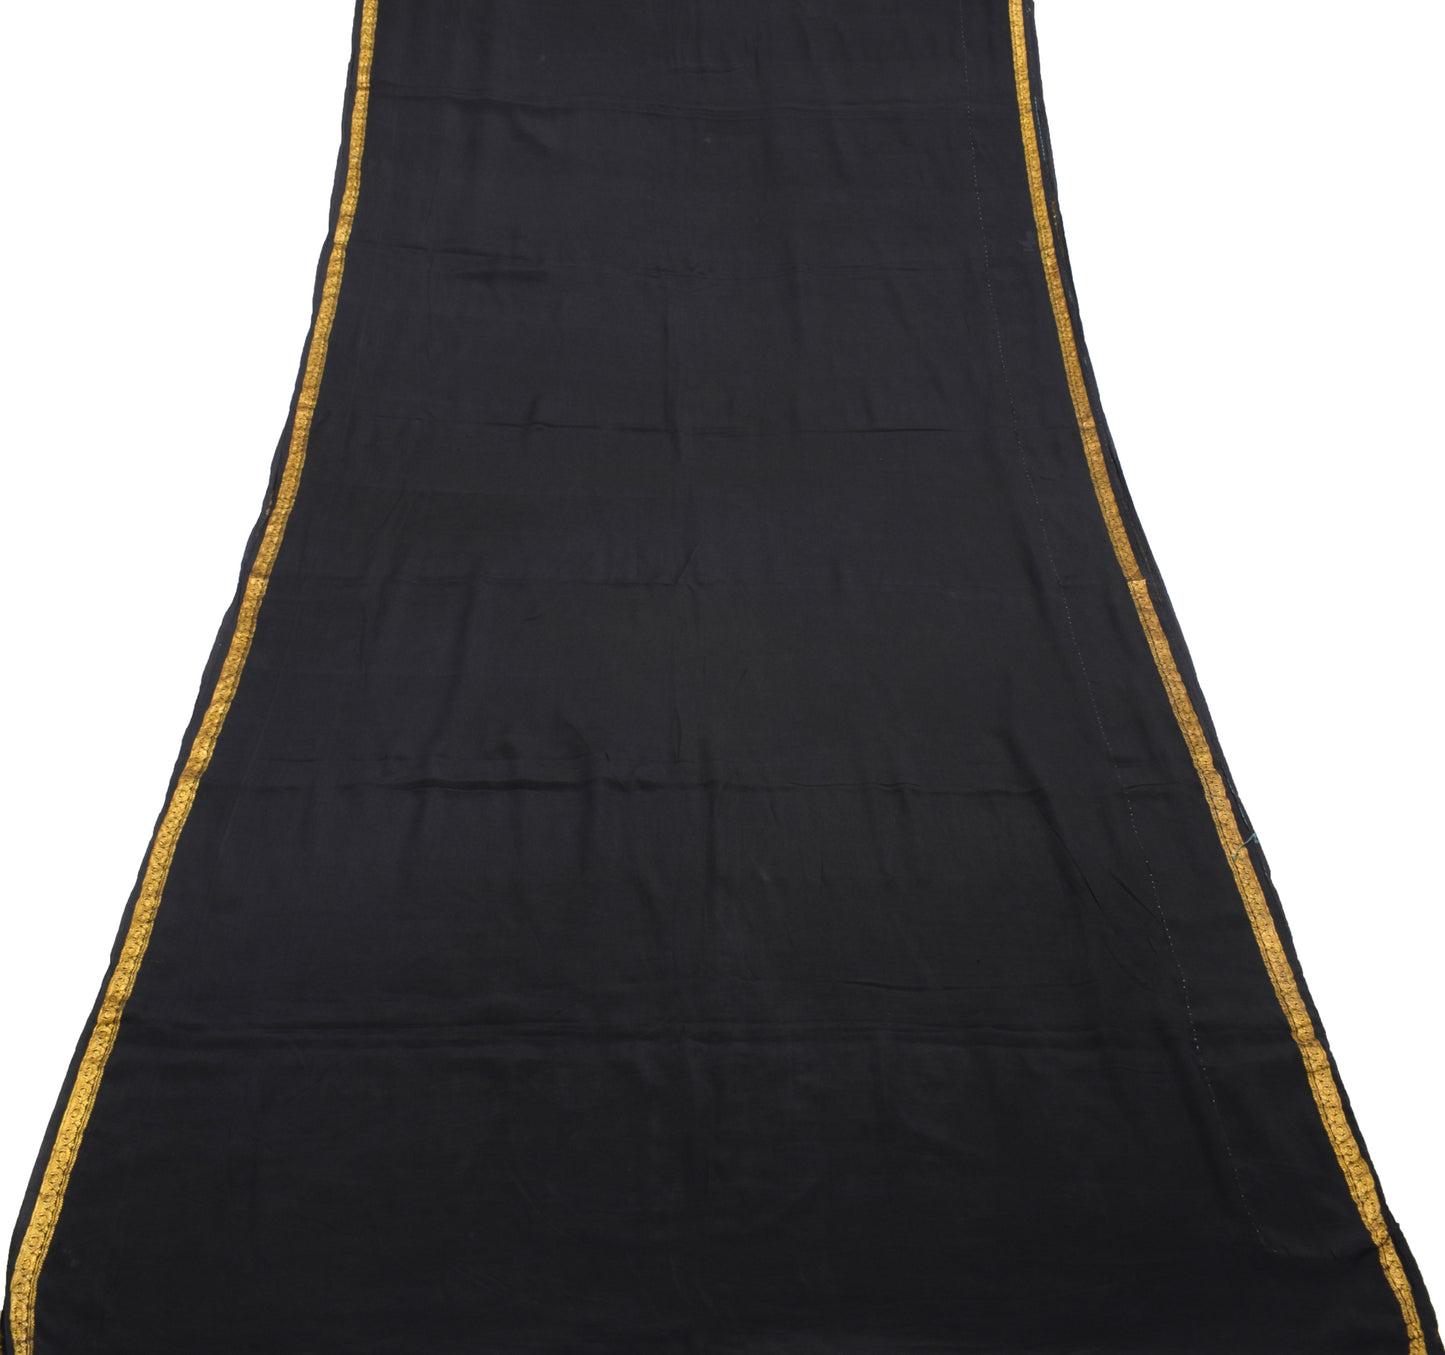 Sushila Vintage Black Indian Saree 100% Pure Silk Woven Soft Sari Craft Fabric